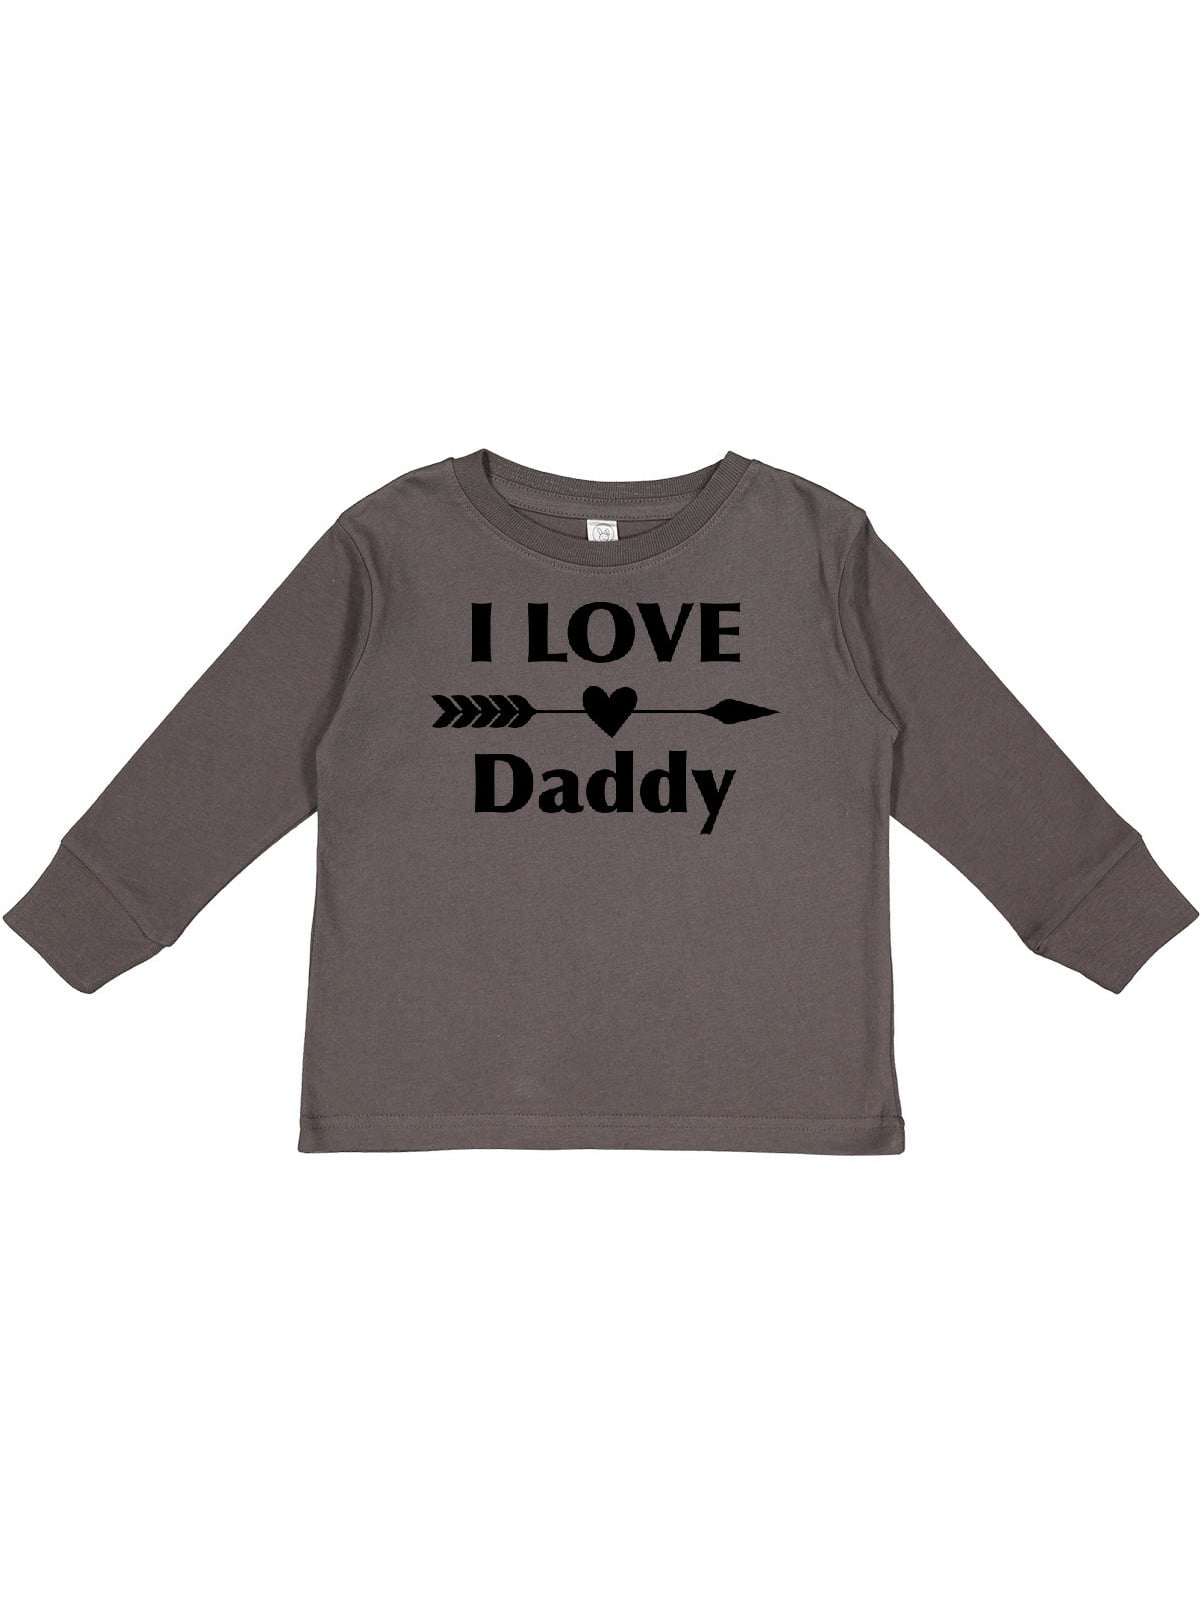 for Boys & Girls I LOVE Daddy Kids T Shirt Children's Present All sizes 